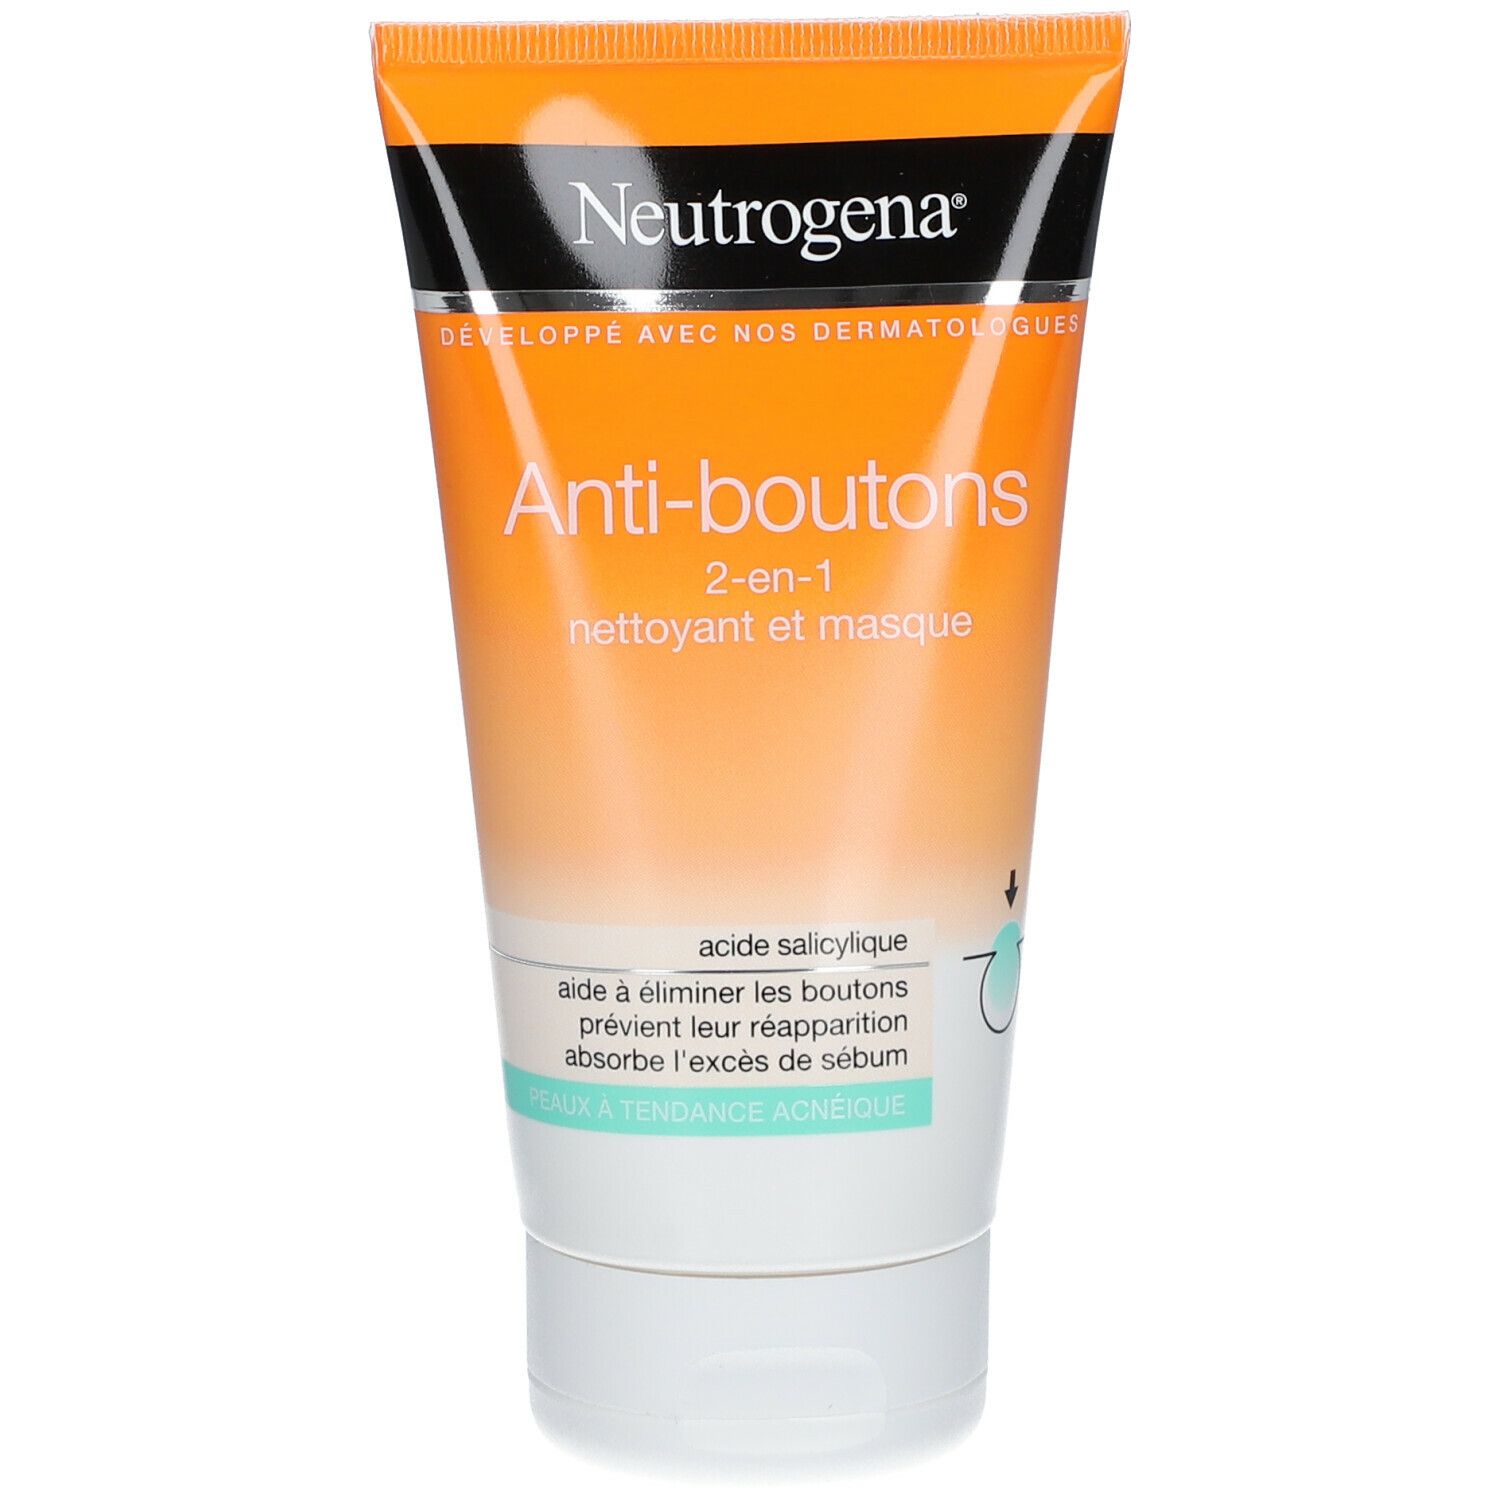 Neutrogena® Anti-boutons : 2-en-1 nettoyant et masque